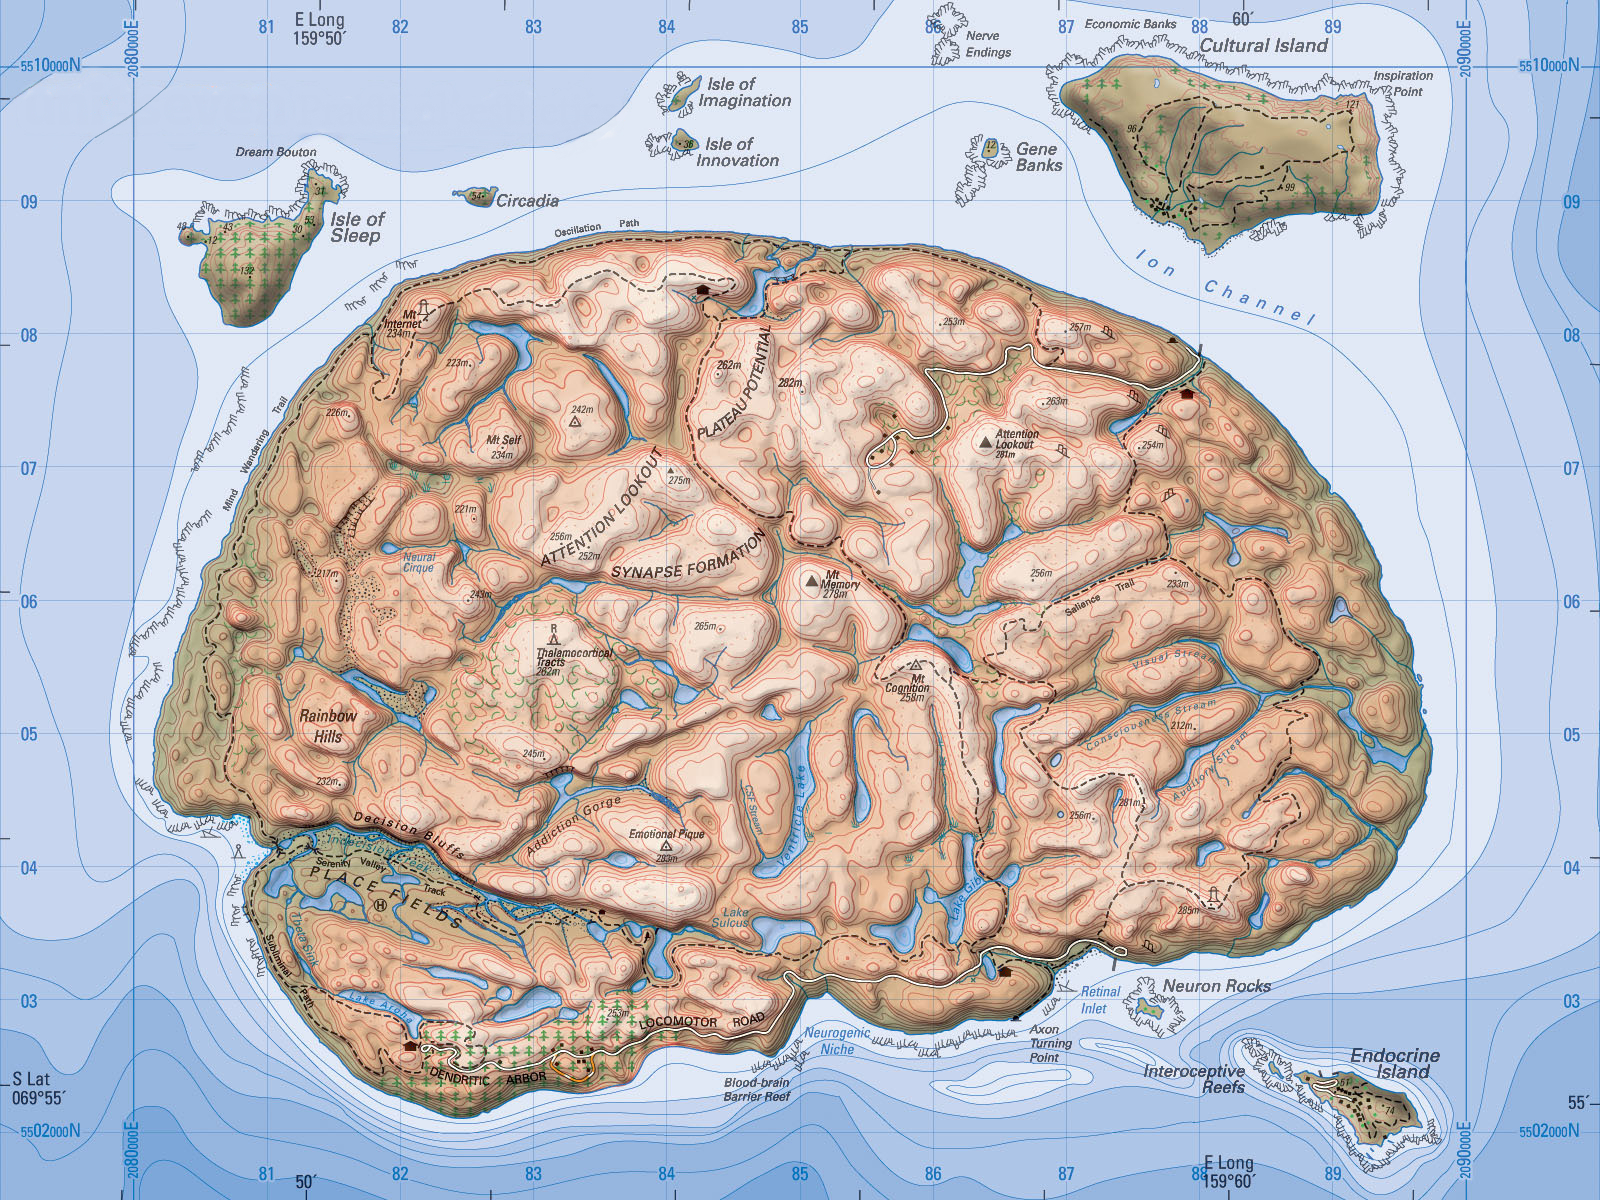 Brain карта. Карта мозга. Подробная карта мозга человека. Карта мозга человека с описанием зон. Архитектоническая карта мозга.